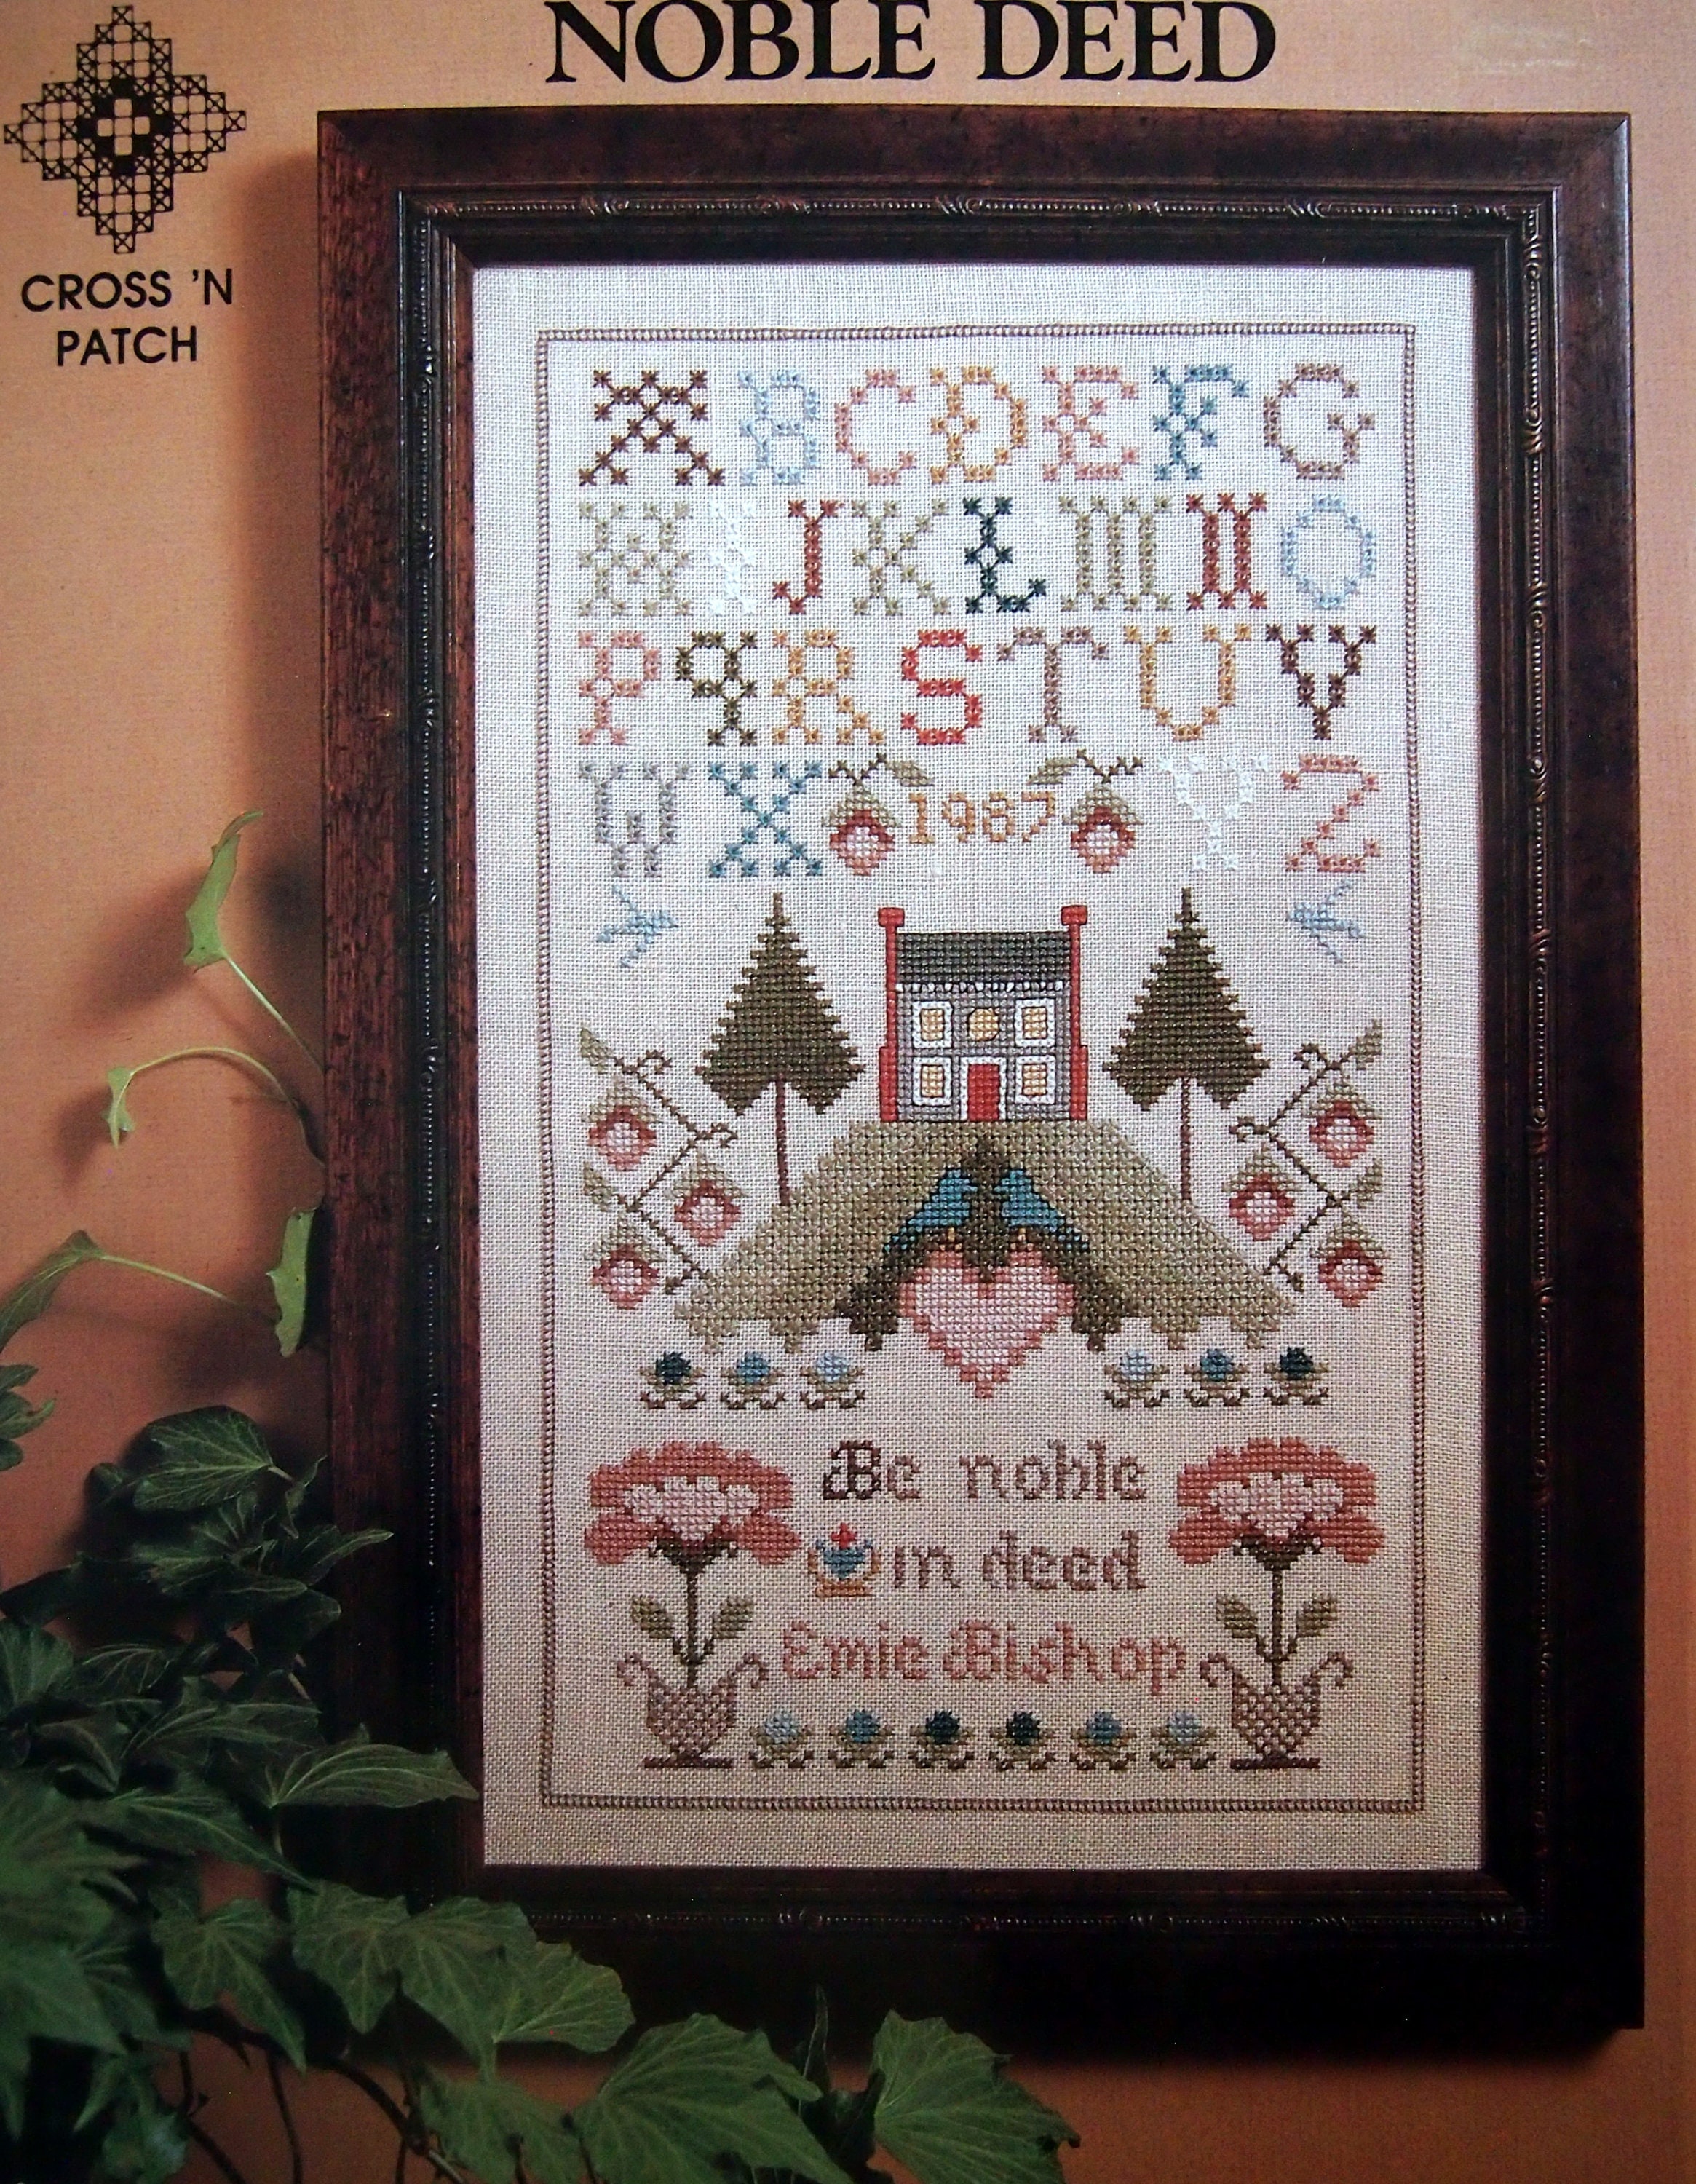 Noble Deed By Cross 'N Patch Vintage Cross Stitch Pattern Leaflet 1987